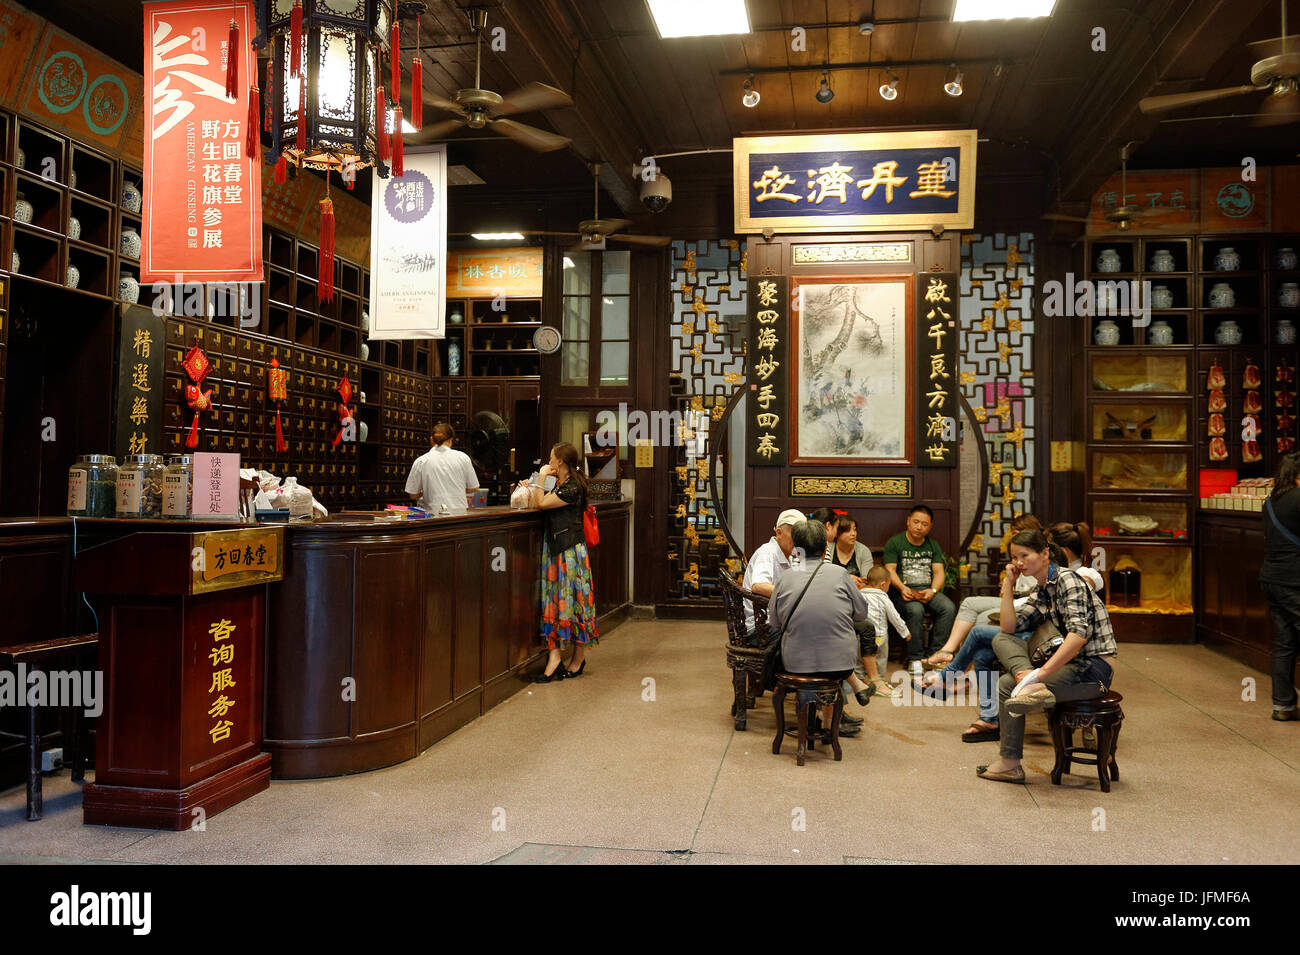 China, Zhejiang Province, Hangzhou, Huqingyu Tang traditional drugstore dating 1874 and still in action Stock Photo